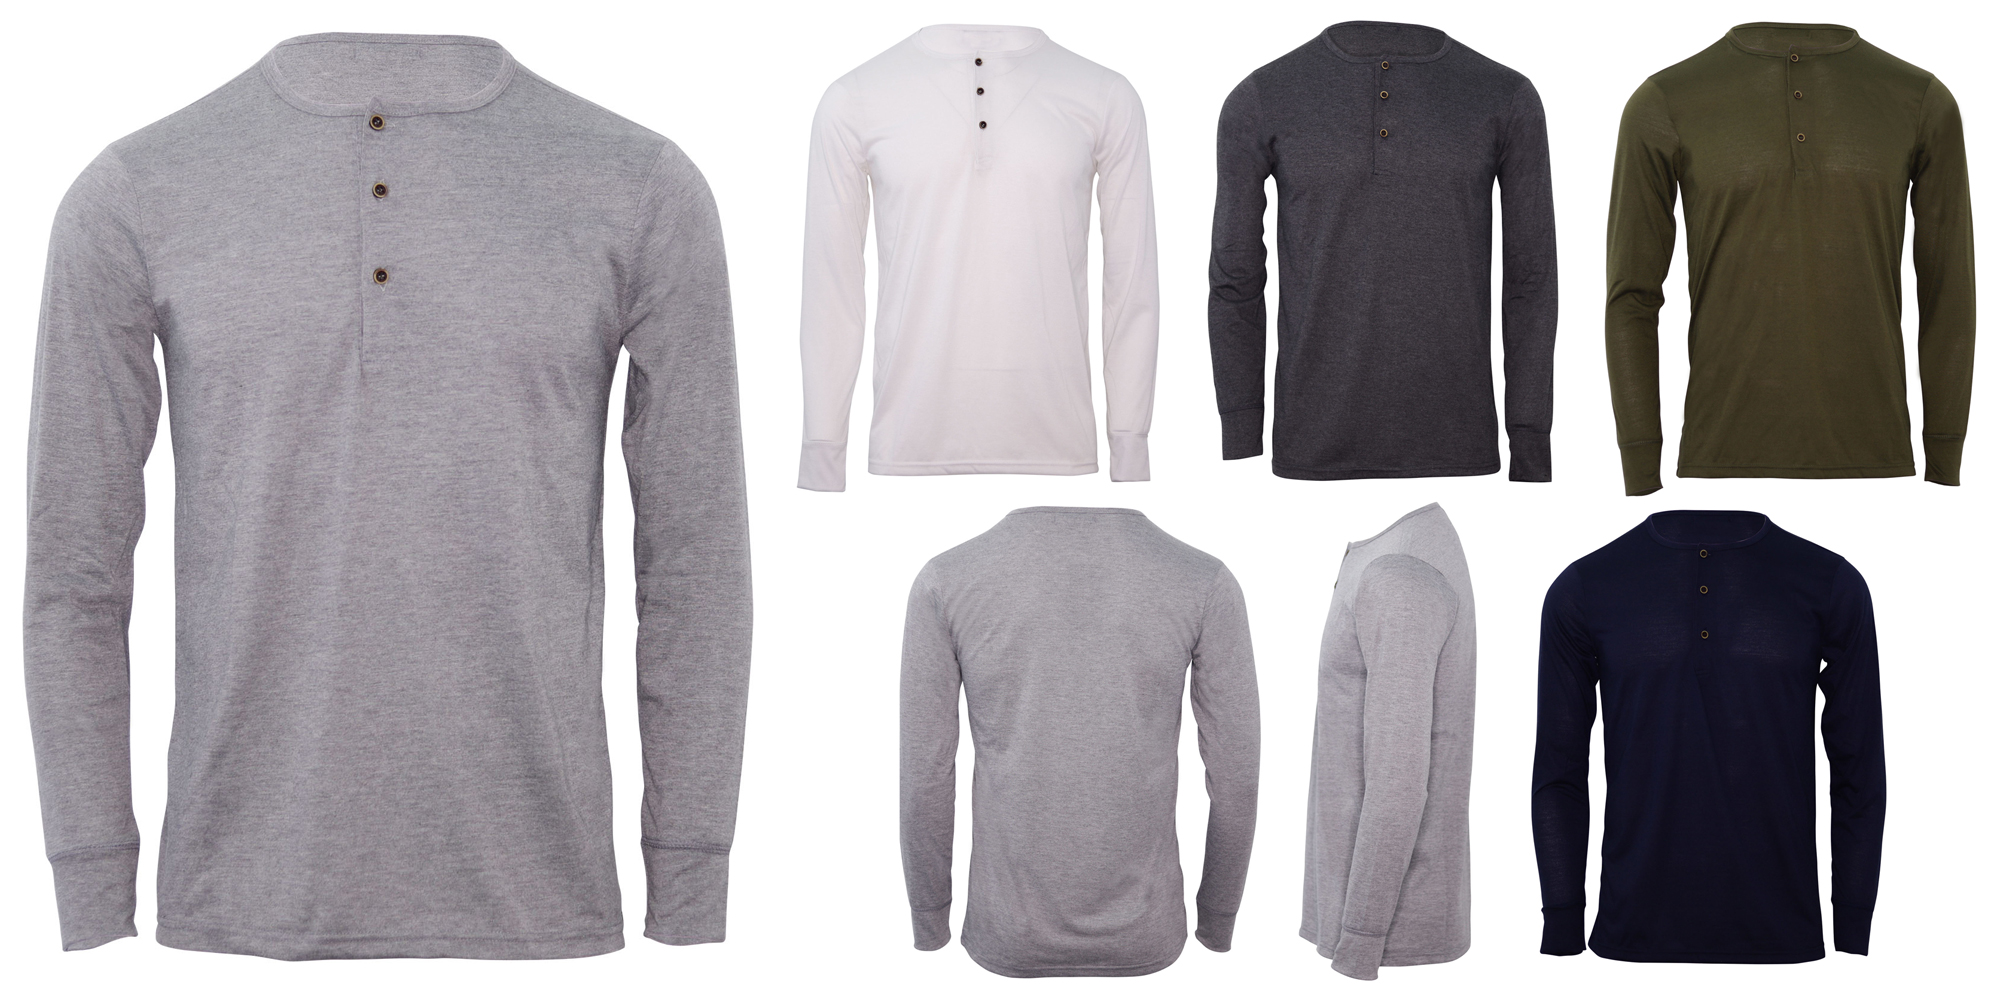 Men's JERSEY Knit Long Sleeve Henley Shirts - Plus Sizes - Choose Your Color(s)